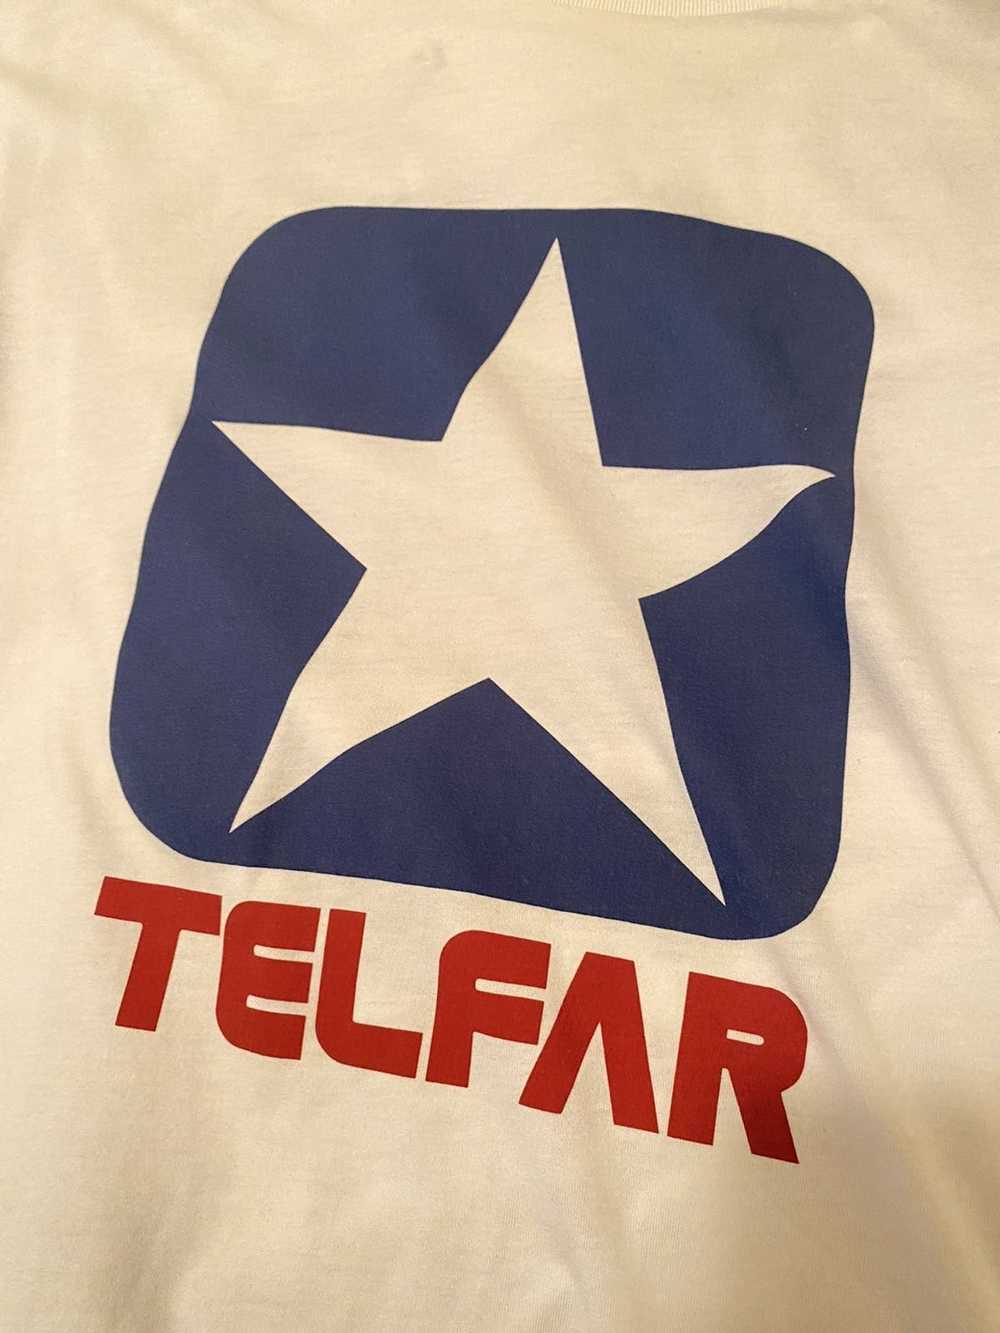 Telfar Telfar x Converse Logo Shirt - image 2